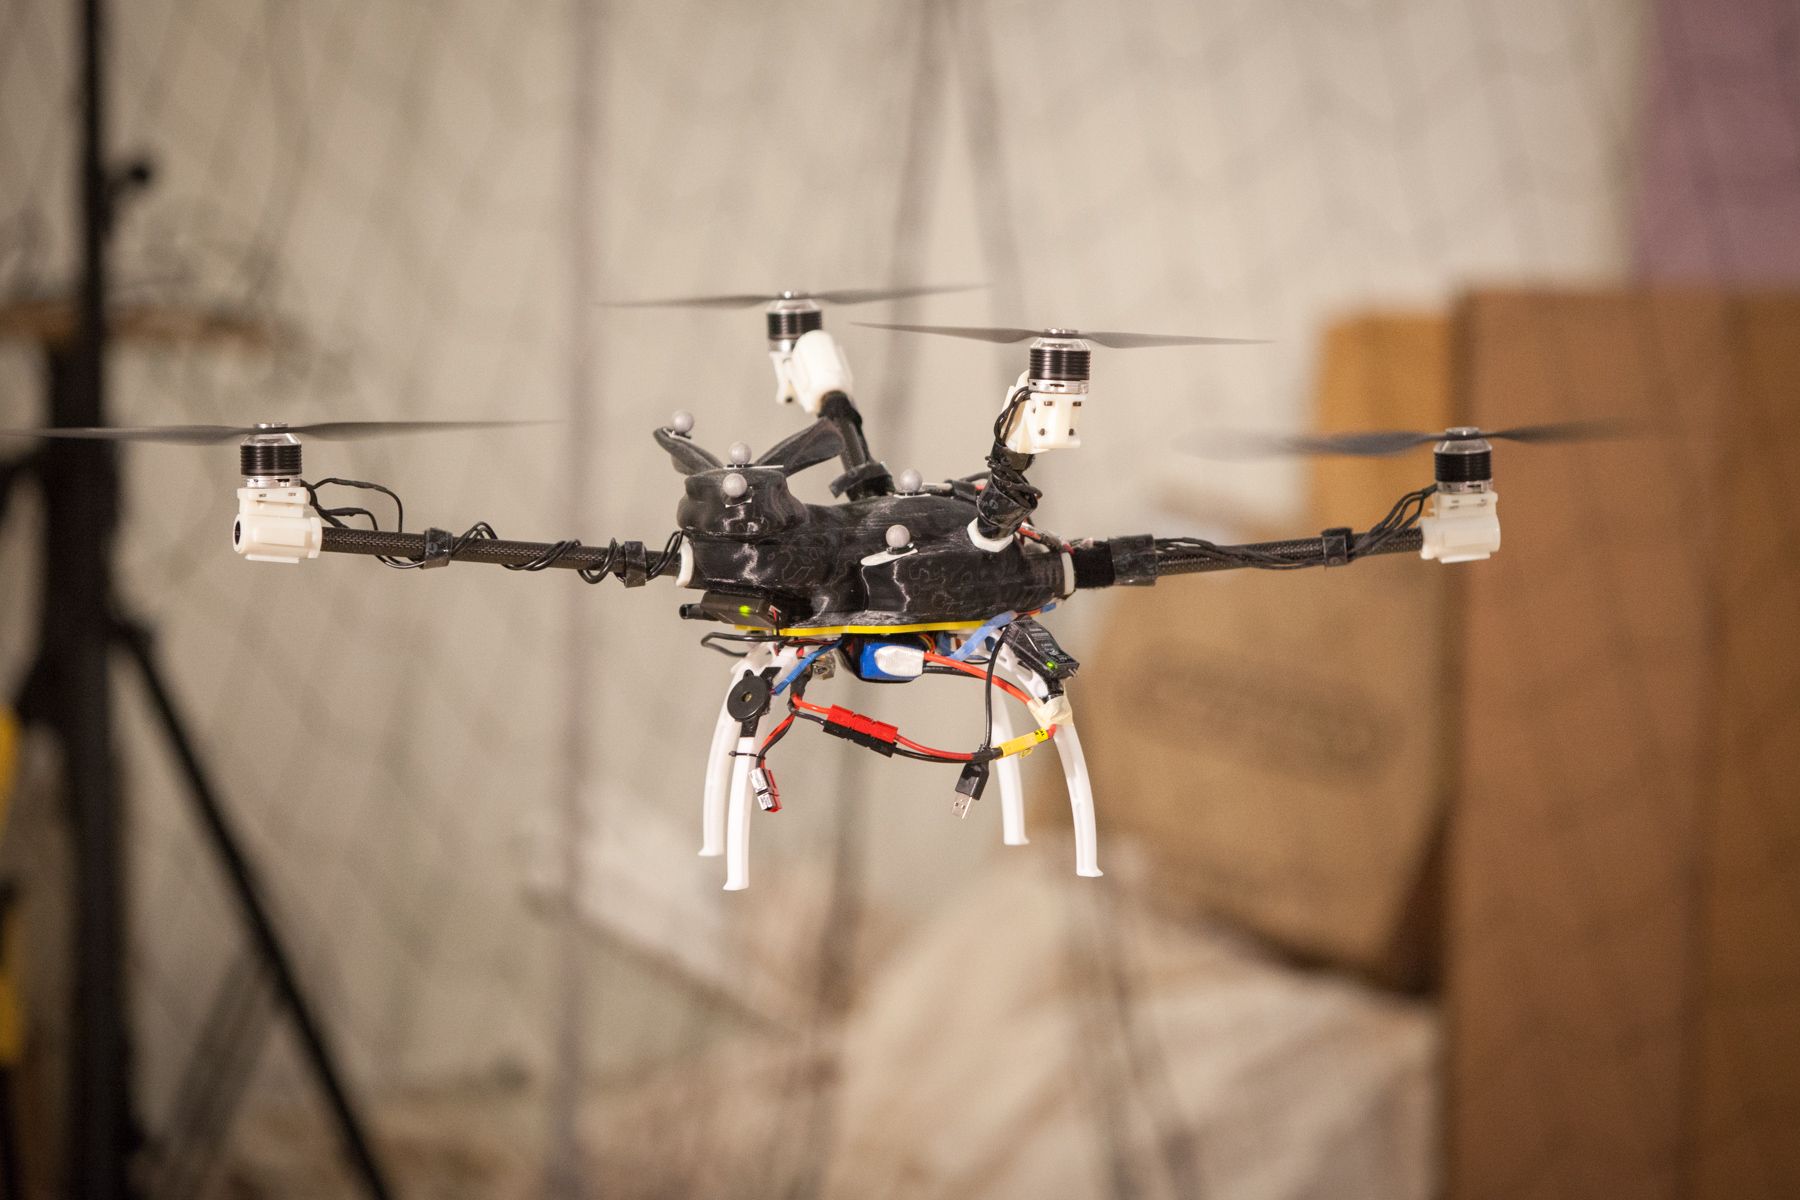 Design your own custom drone MIT News | Massachusetts Institute